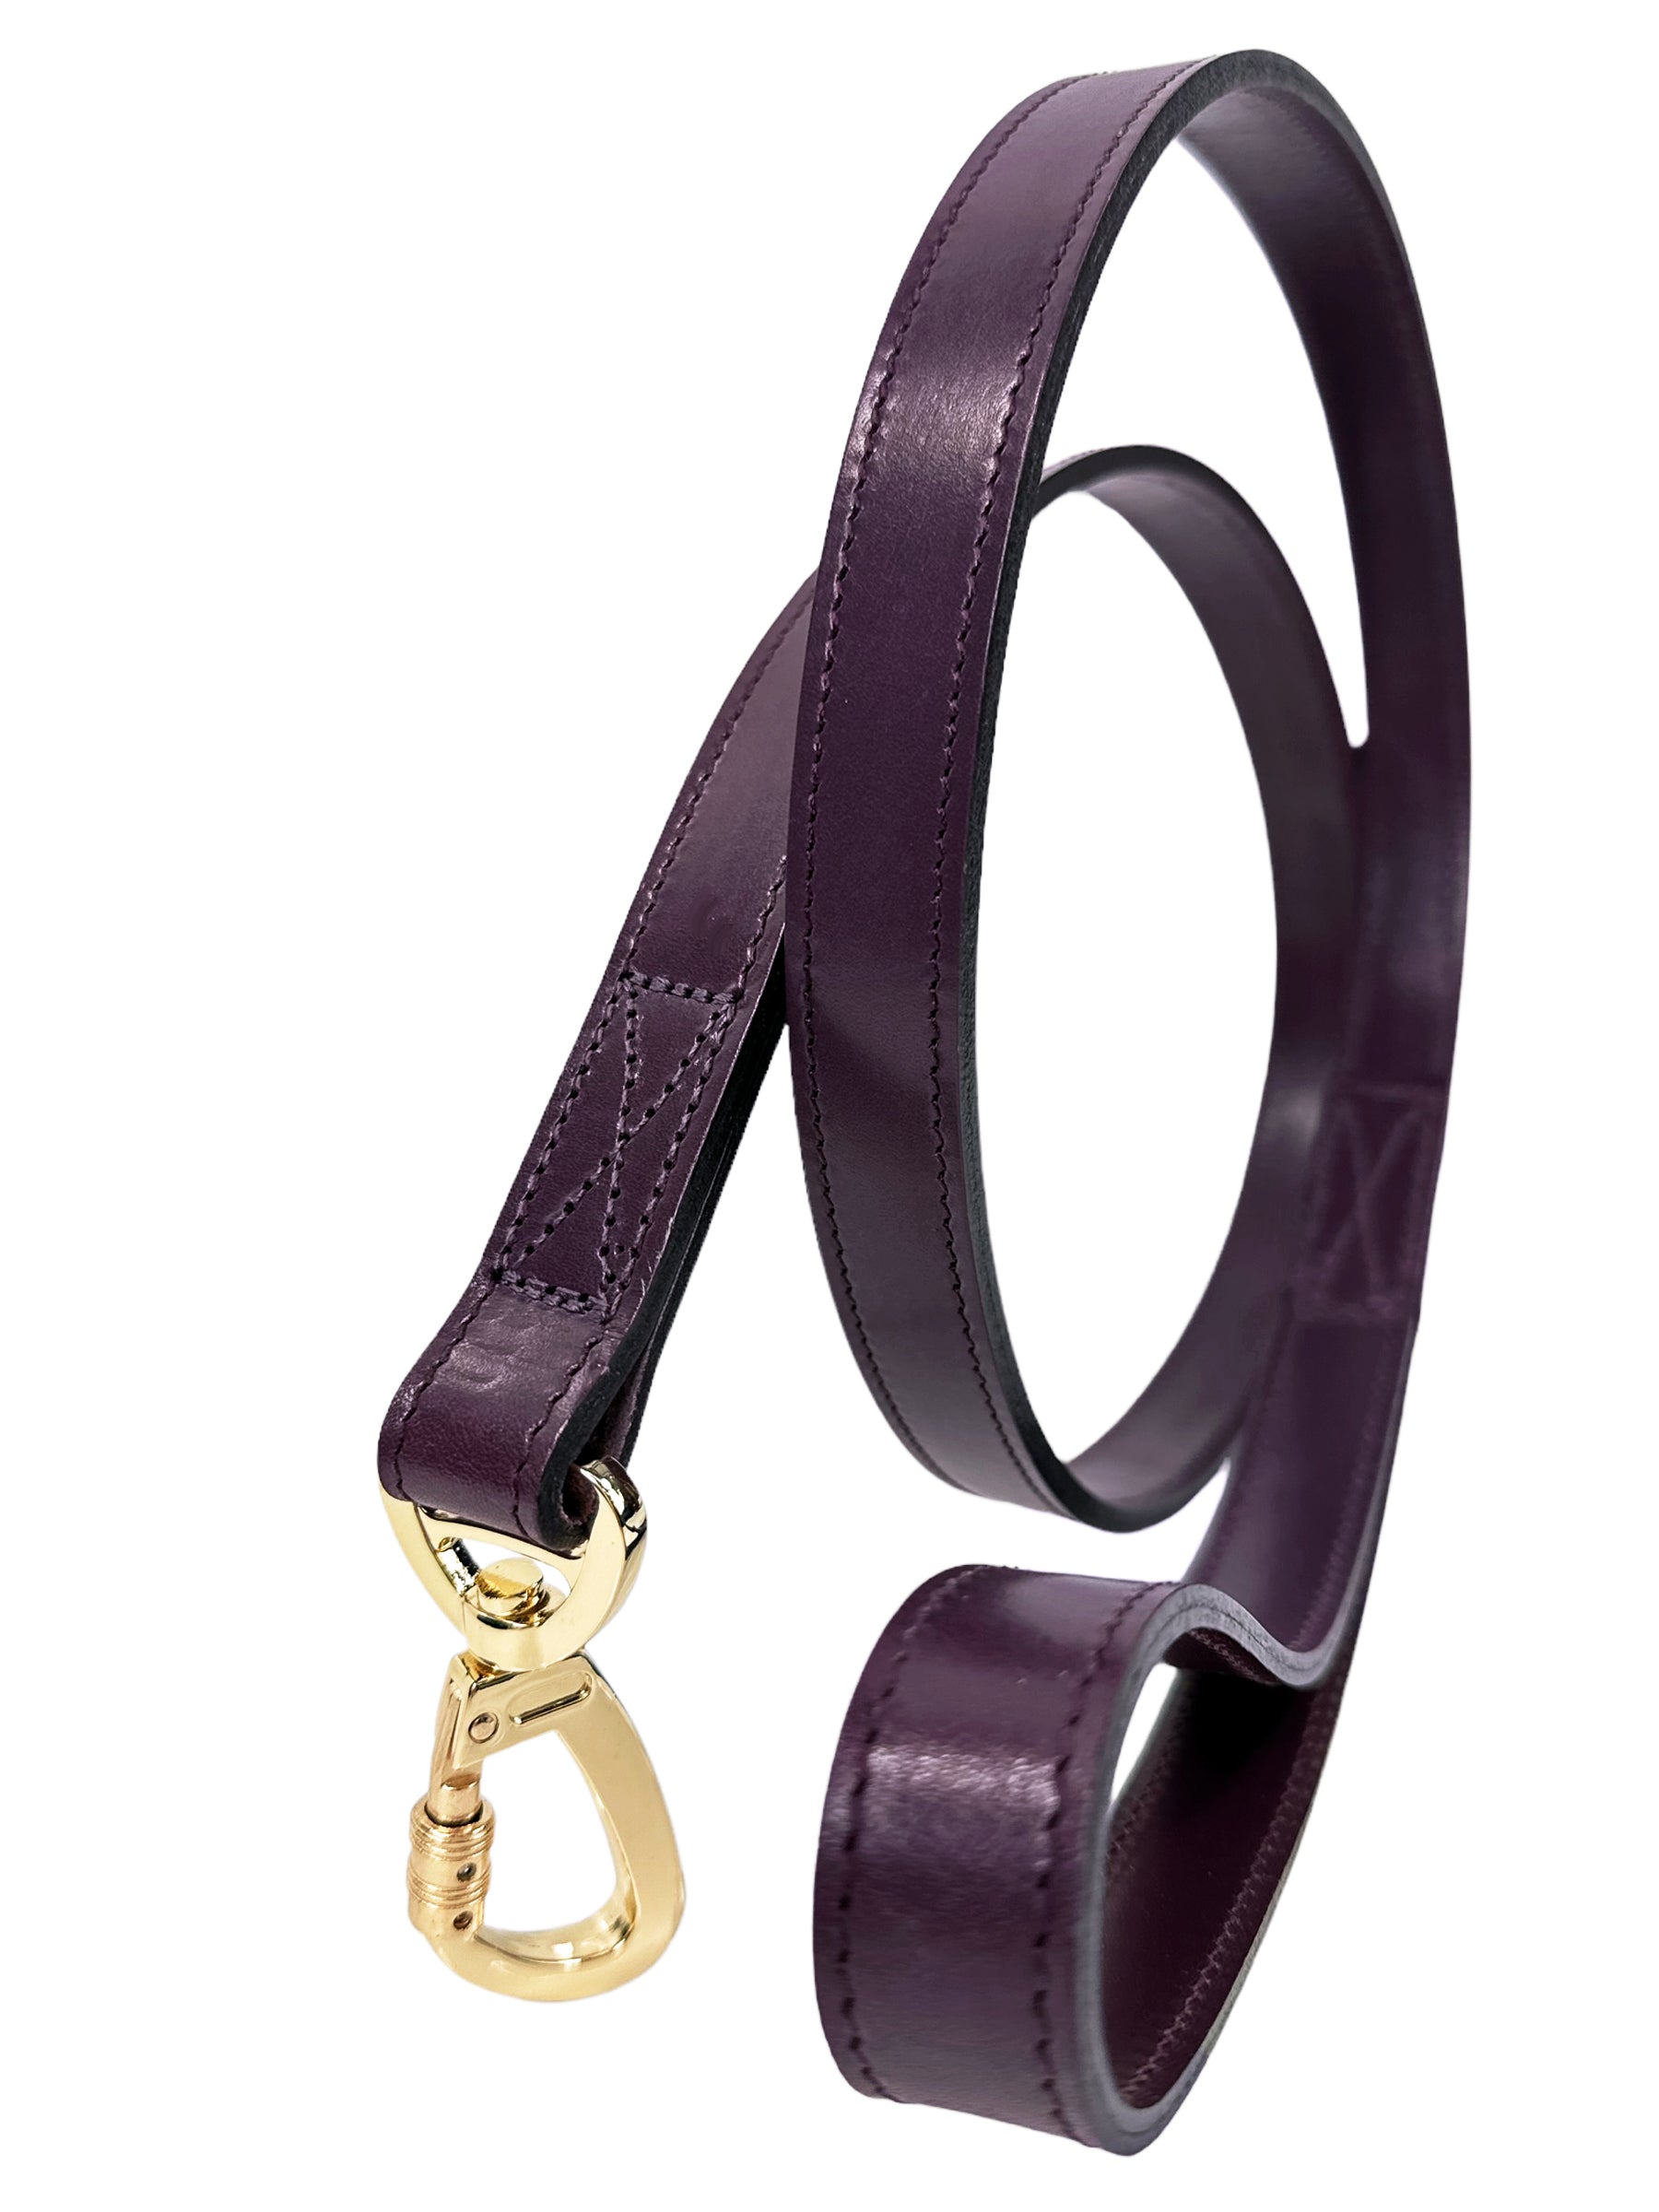 Daisy Dog Leash in Royal Purple & Gold